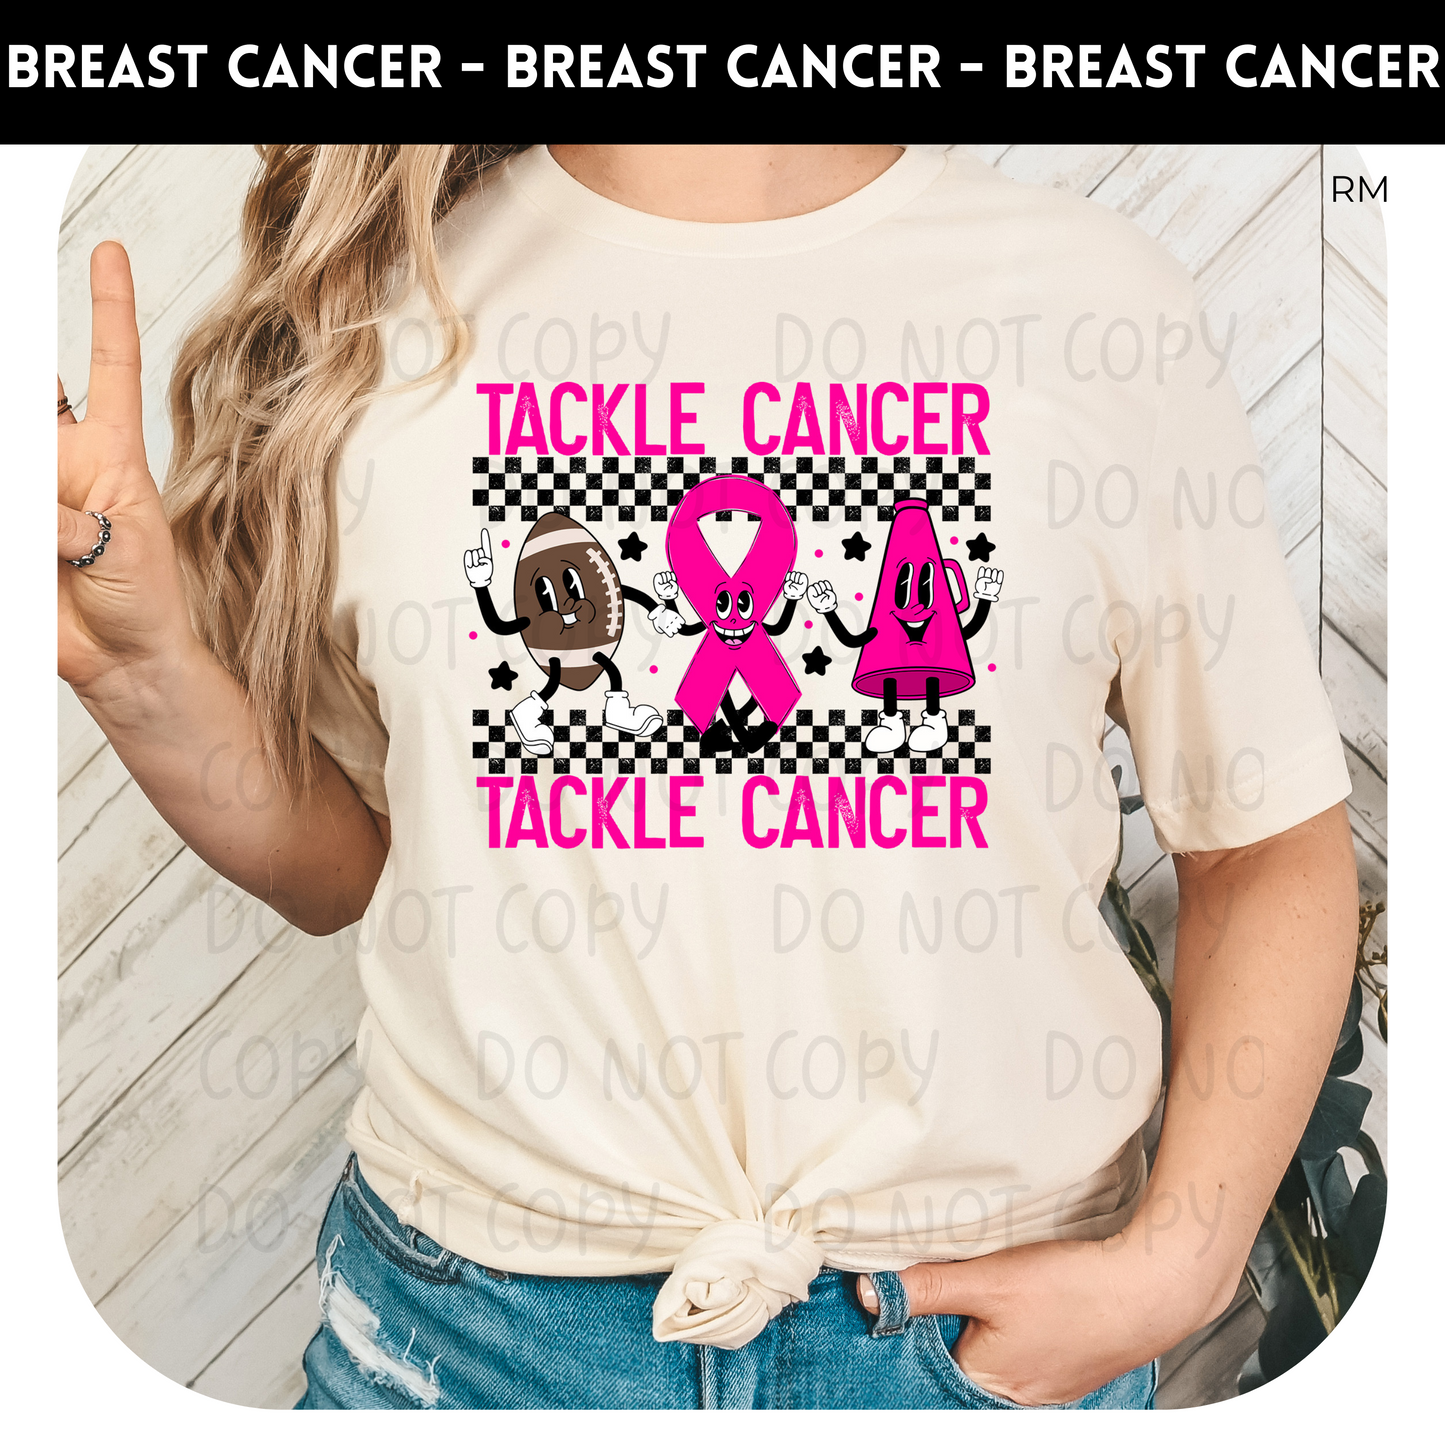 Tackle Cancer Adult Shirt- Breast Cancer Awareness 81